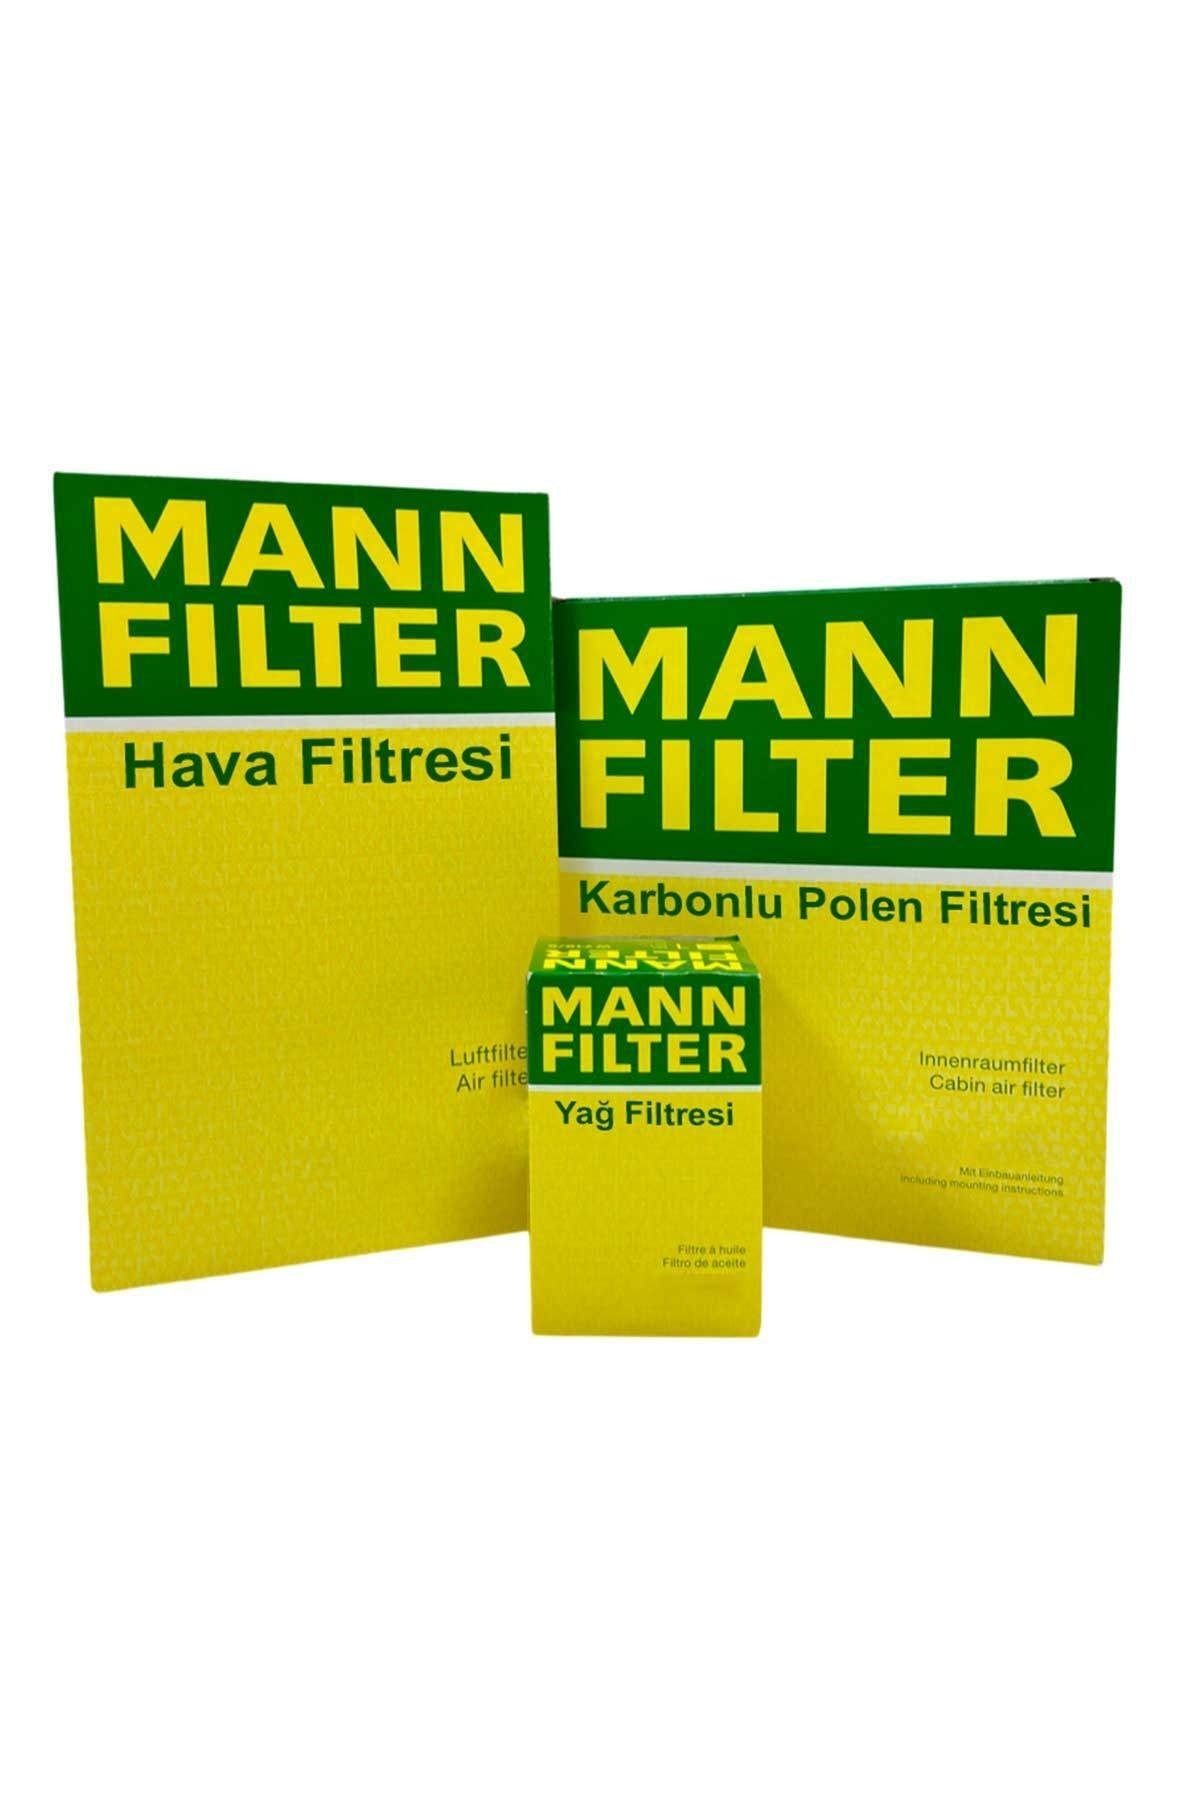 Mann Filter Uzmanparça Focus 3 1.5 Tdci Dizel Mann Filtre Bakım Seti 2015-2018 | Hava+yağ+karbonlu Polen